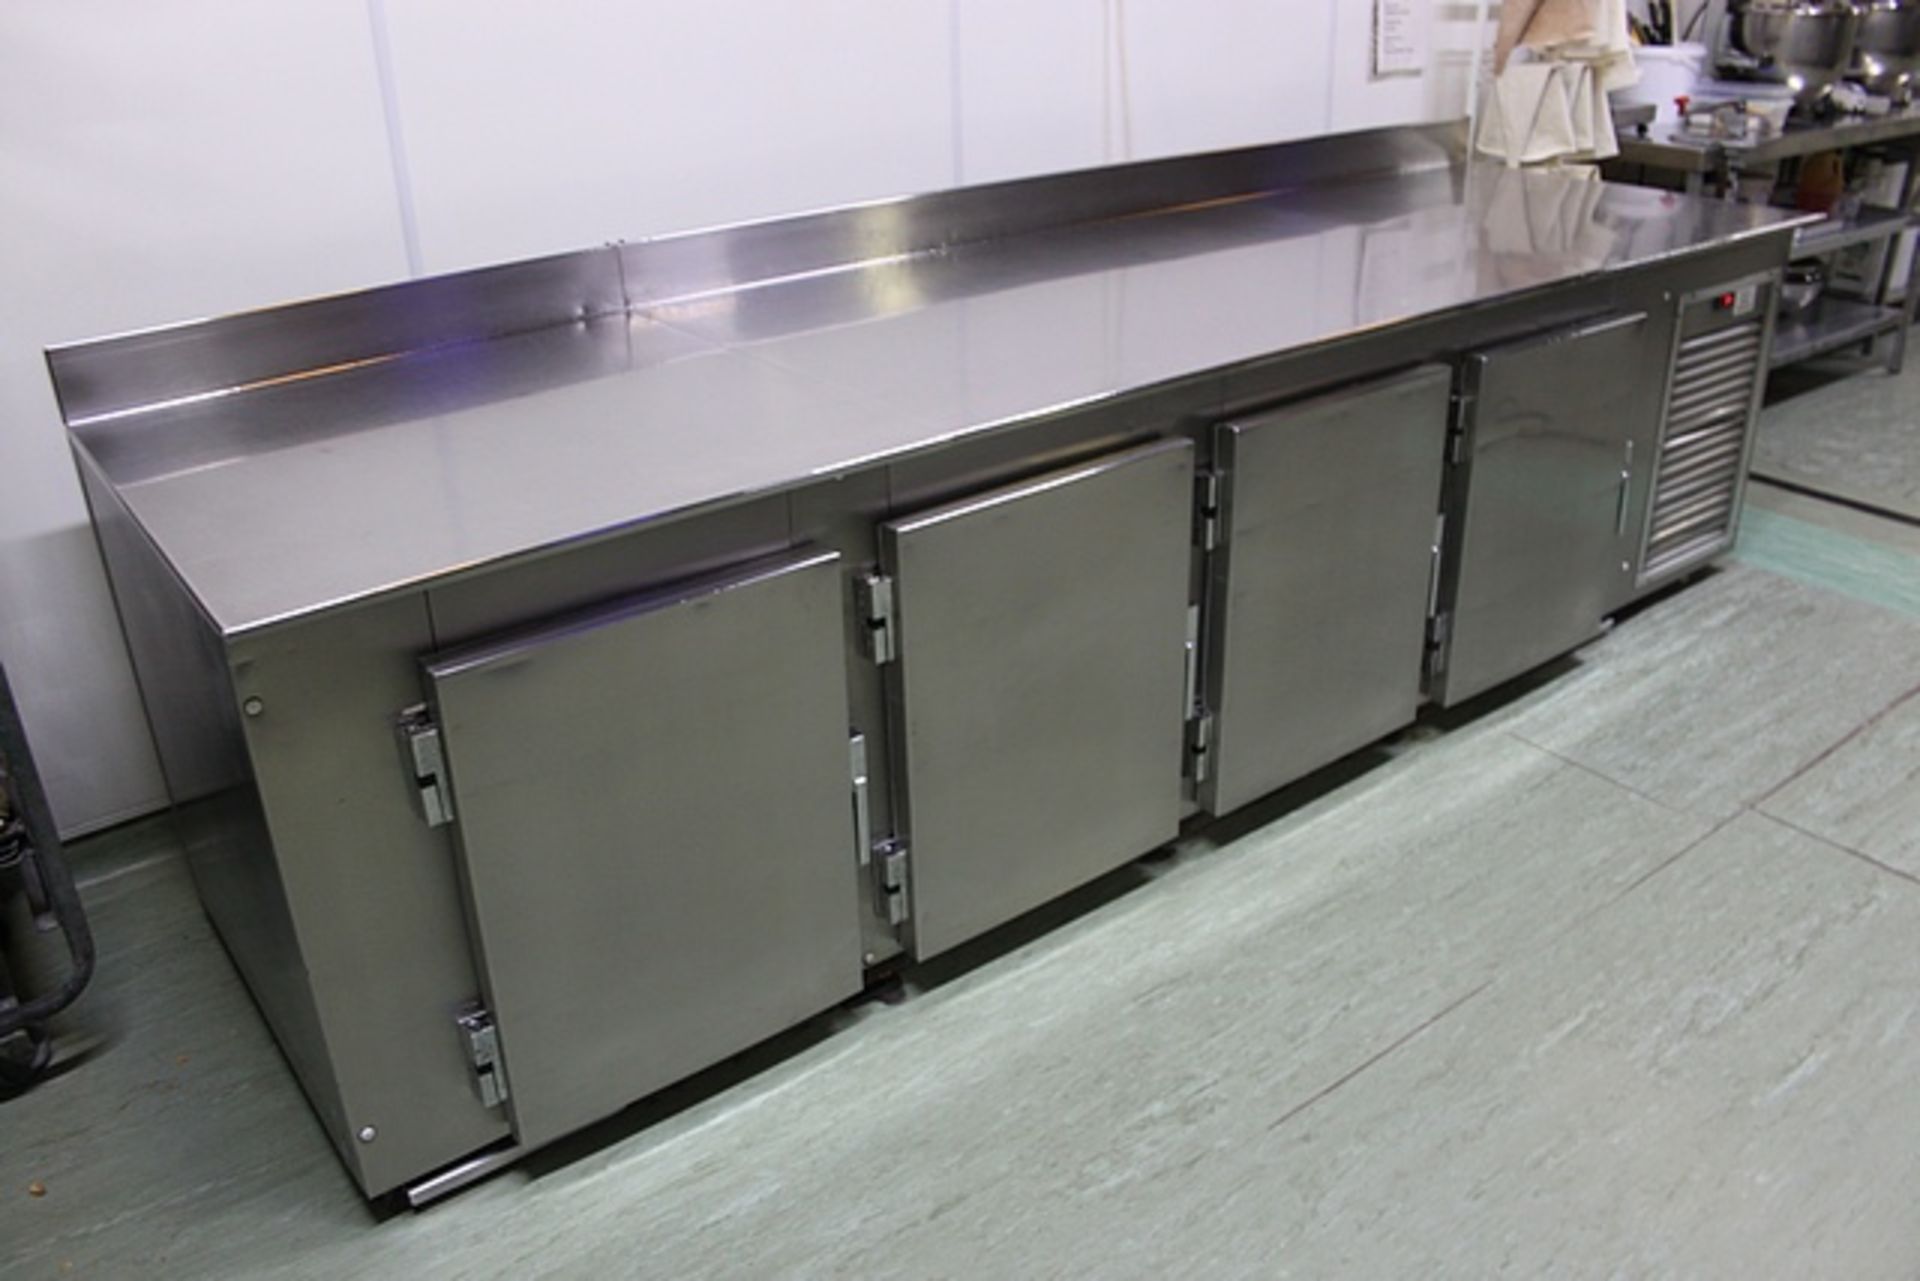 William stainless steel four door refrigerated bench counter stainless steel worktop internally